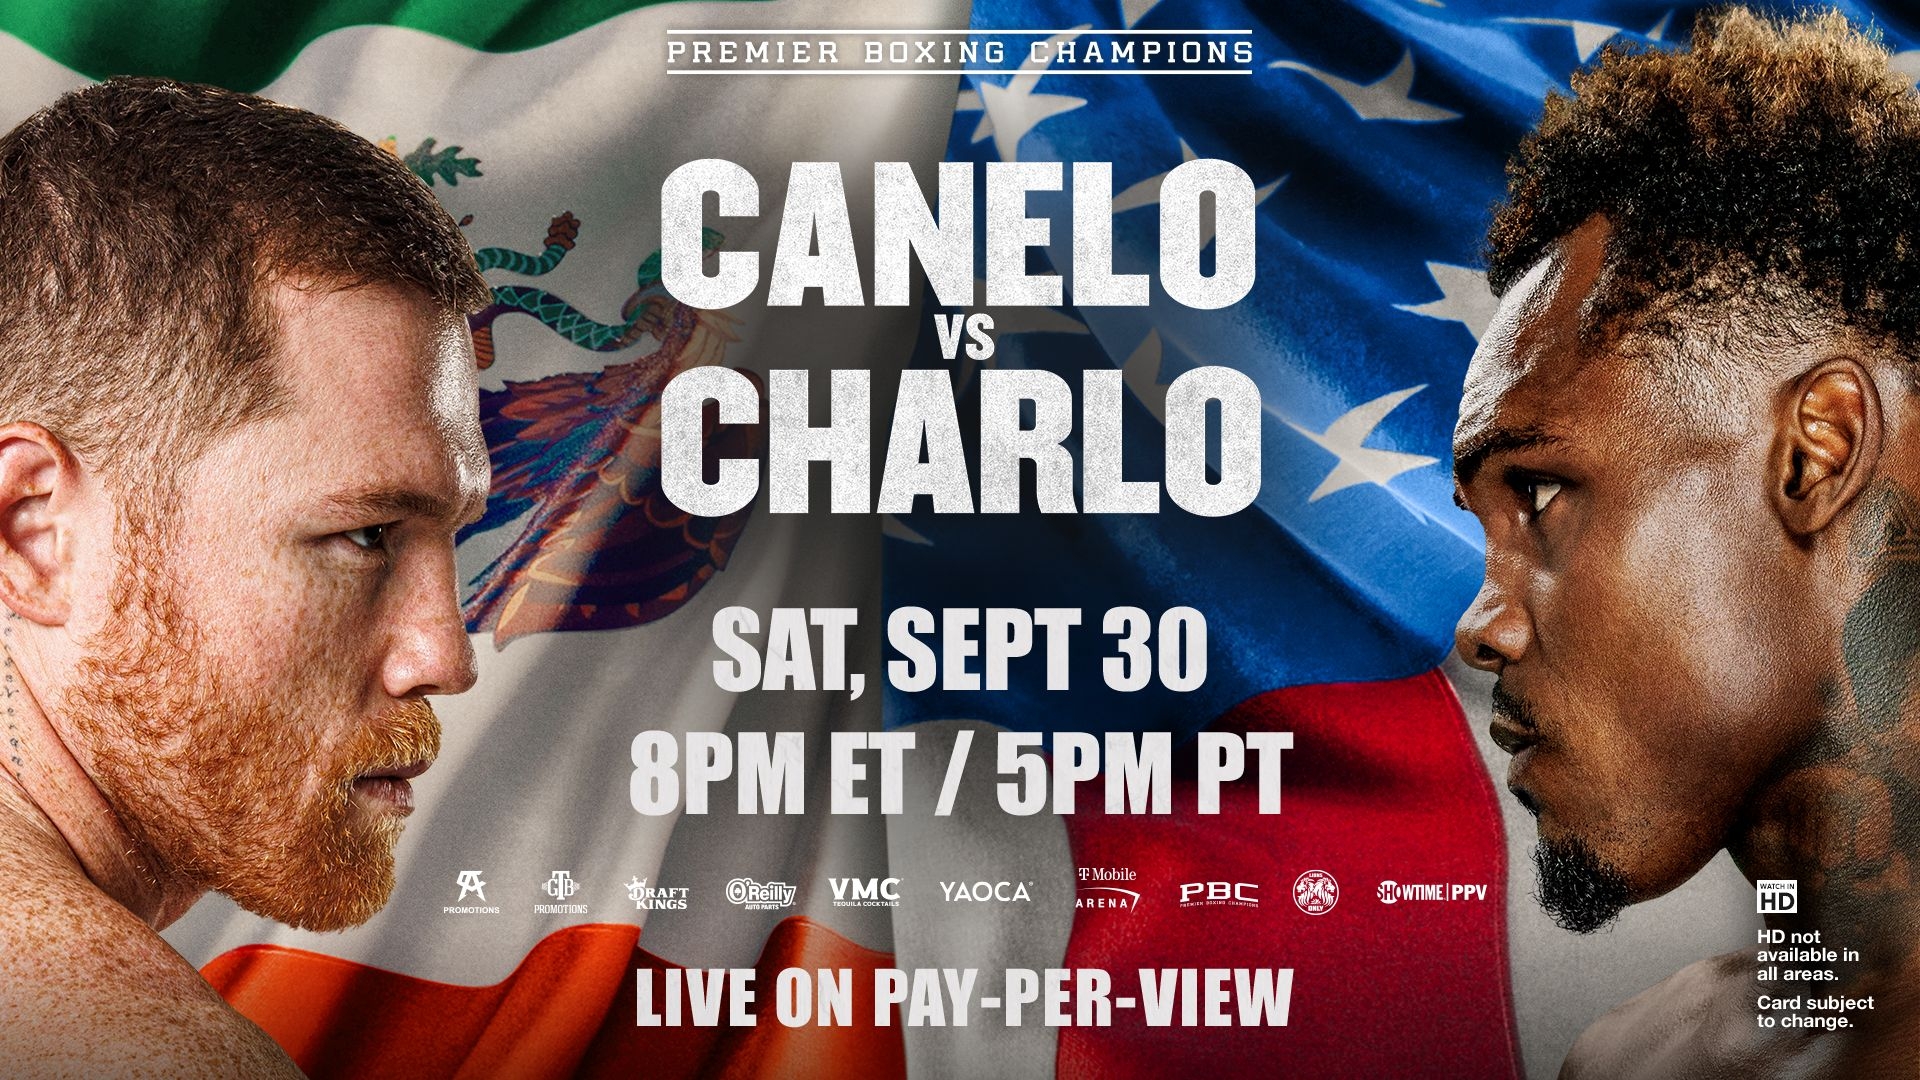 Canelo Alvarez versus Jermell Charlo, live Saturday, September 30, on Pay-Per-View with Spectrum TV.